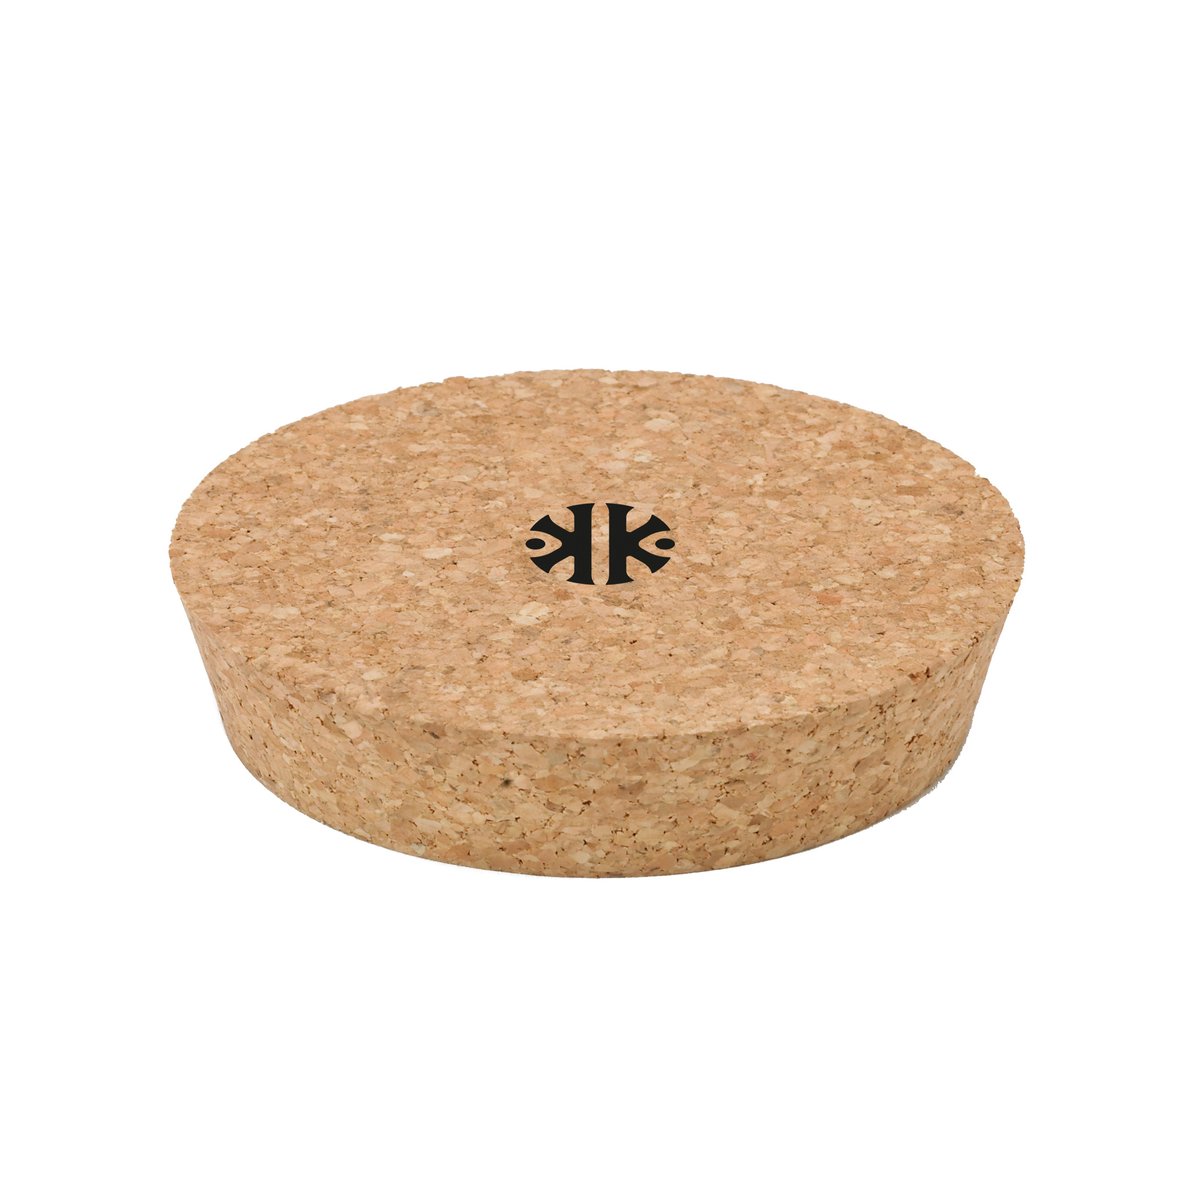 Knabstrup Keramik Pickle kork til krukke 0,5 L Kork (5713959012271)